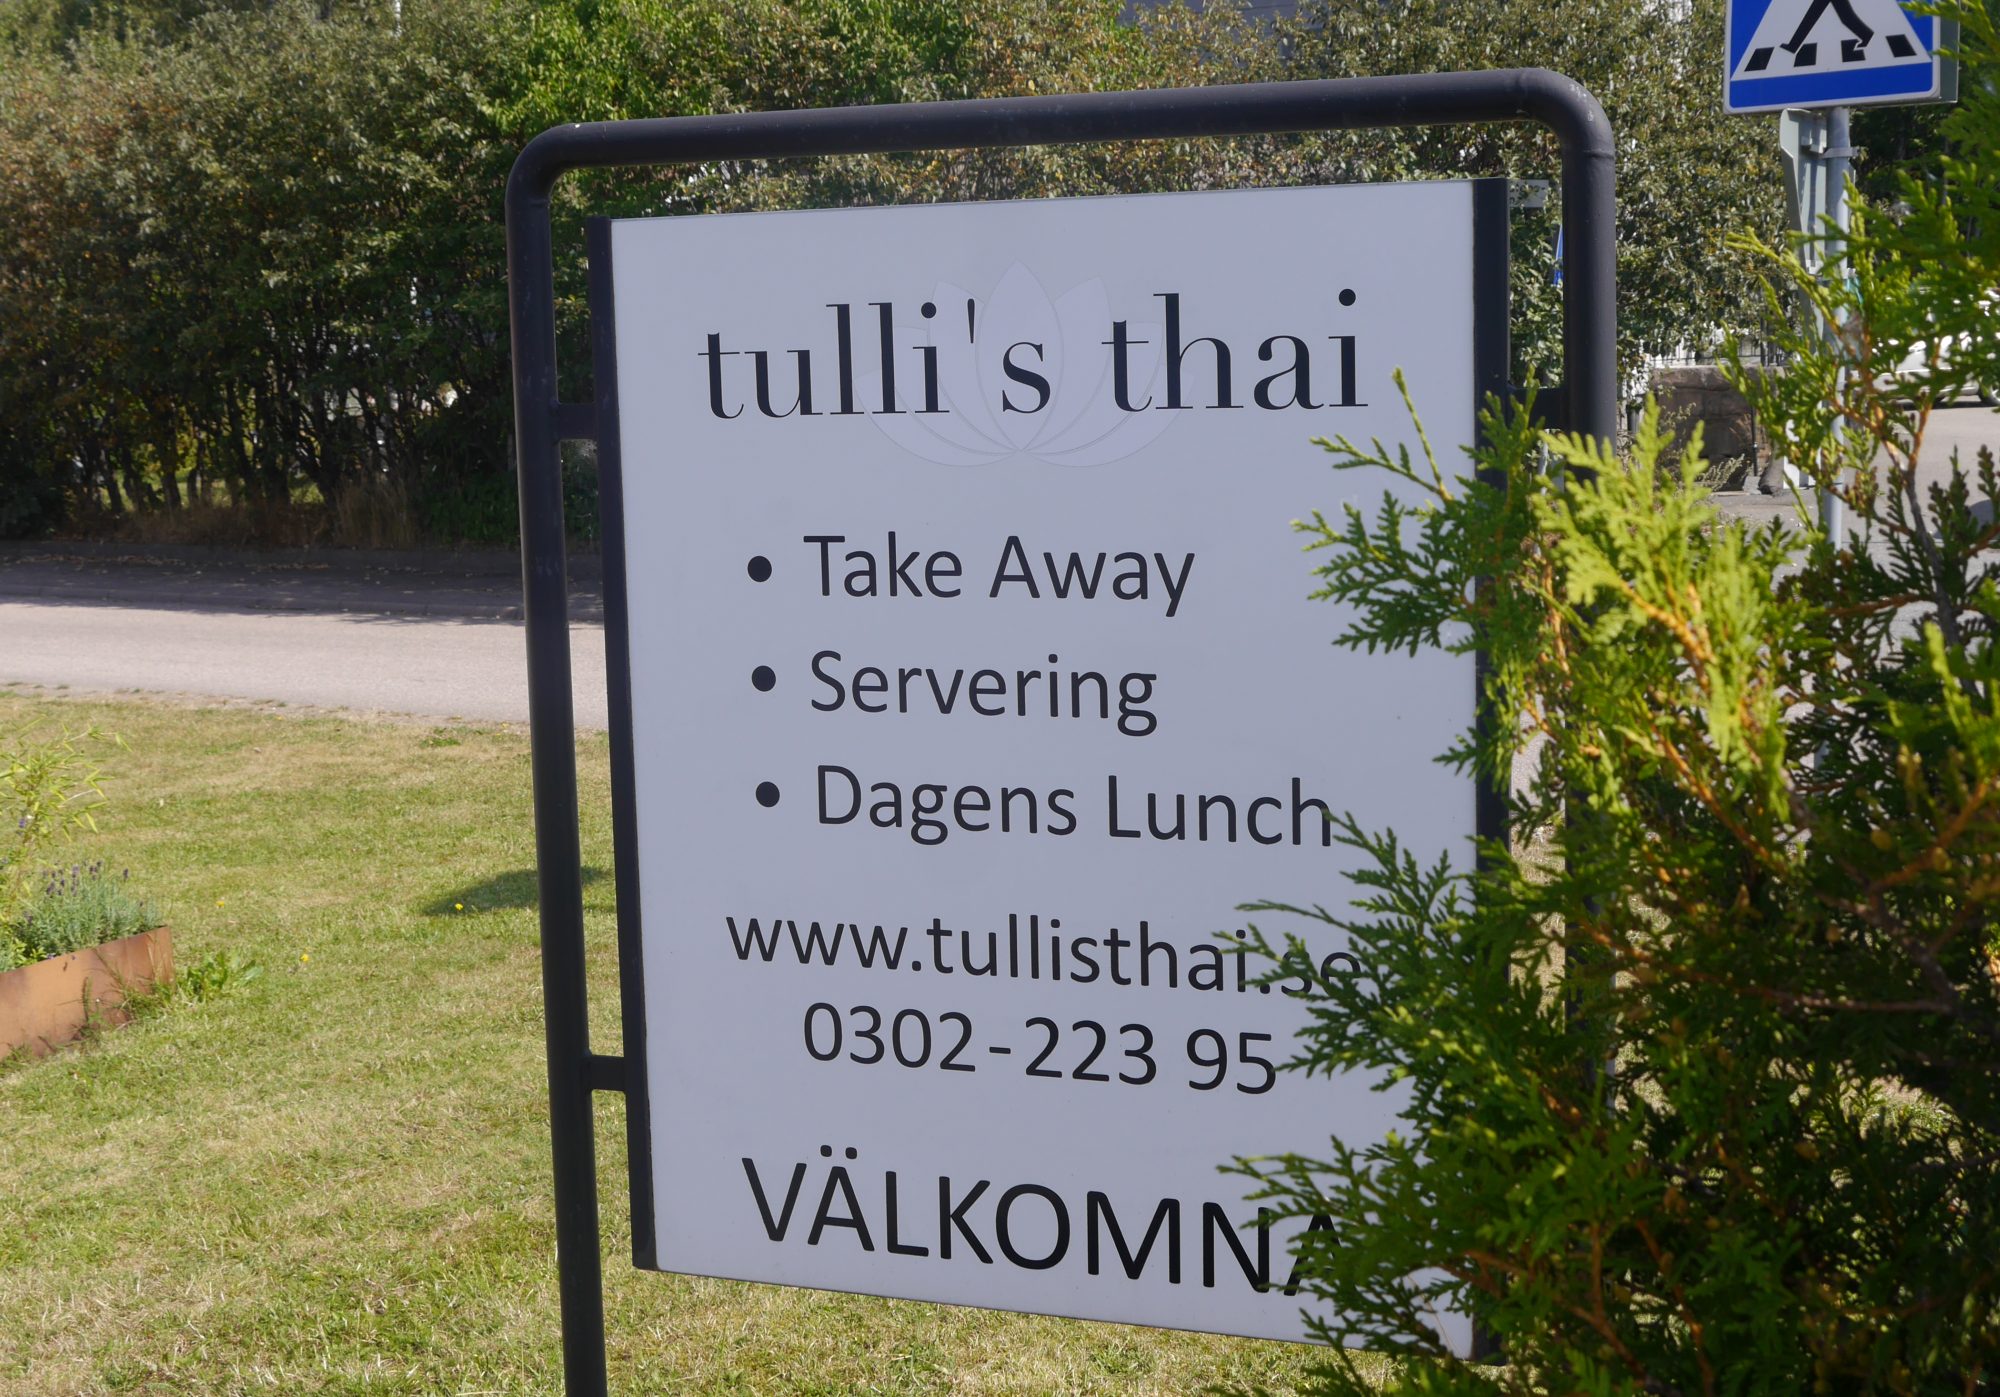 Tulli's Thai